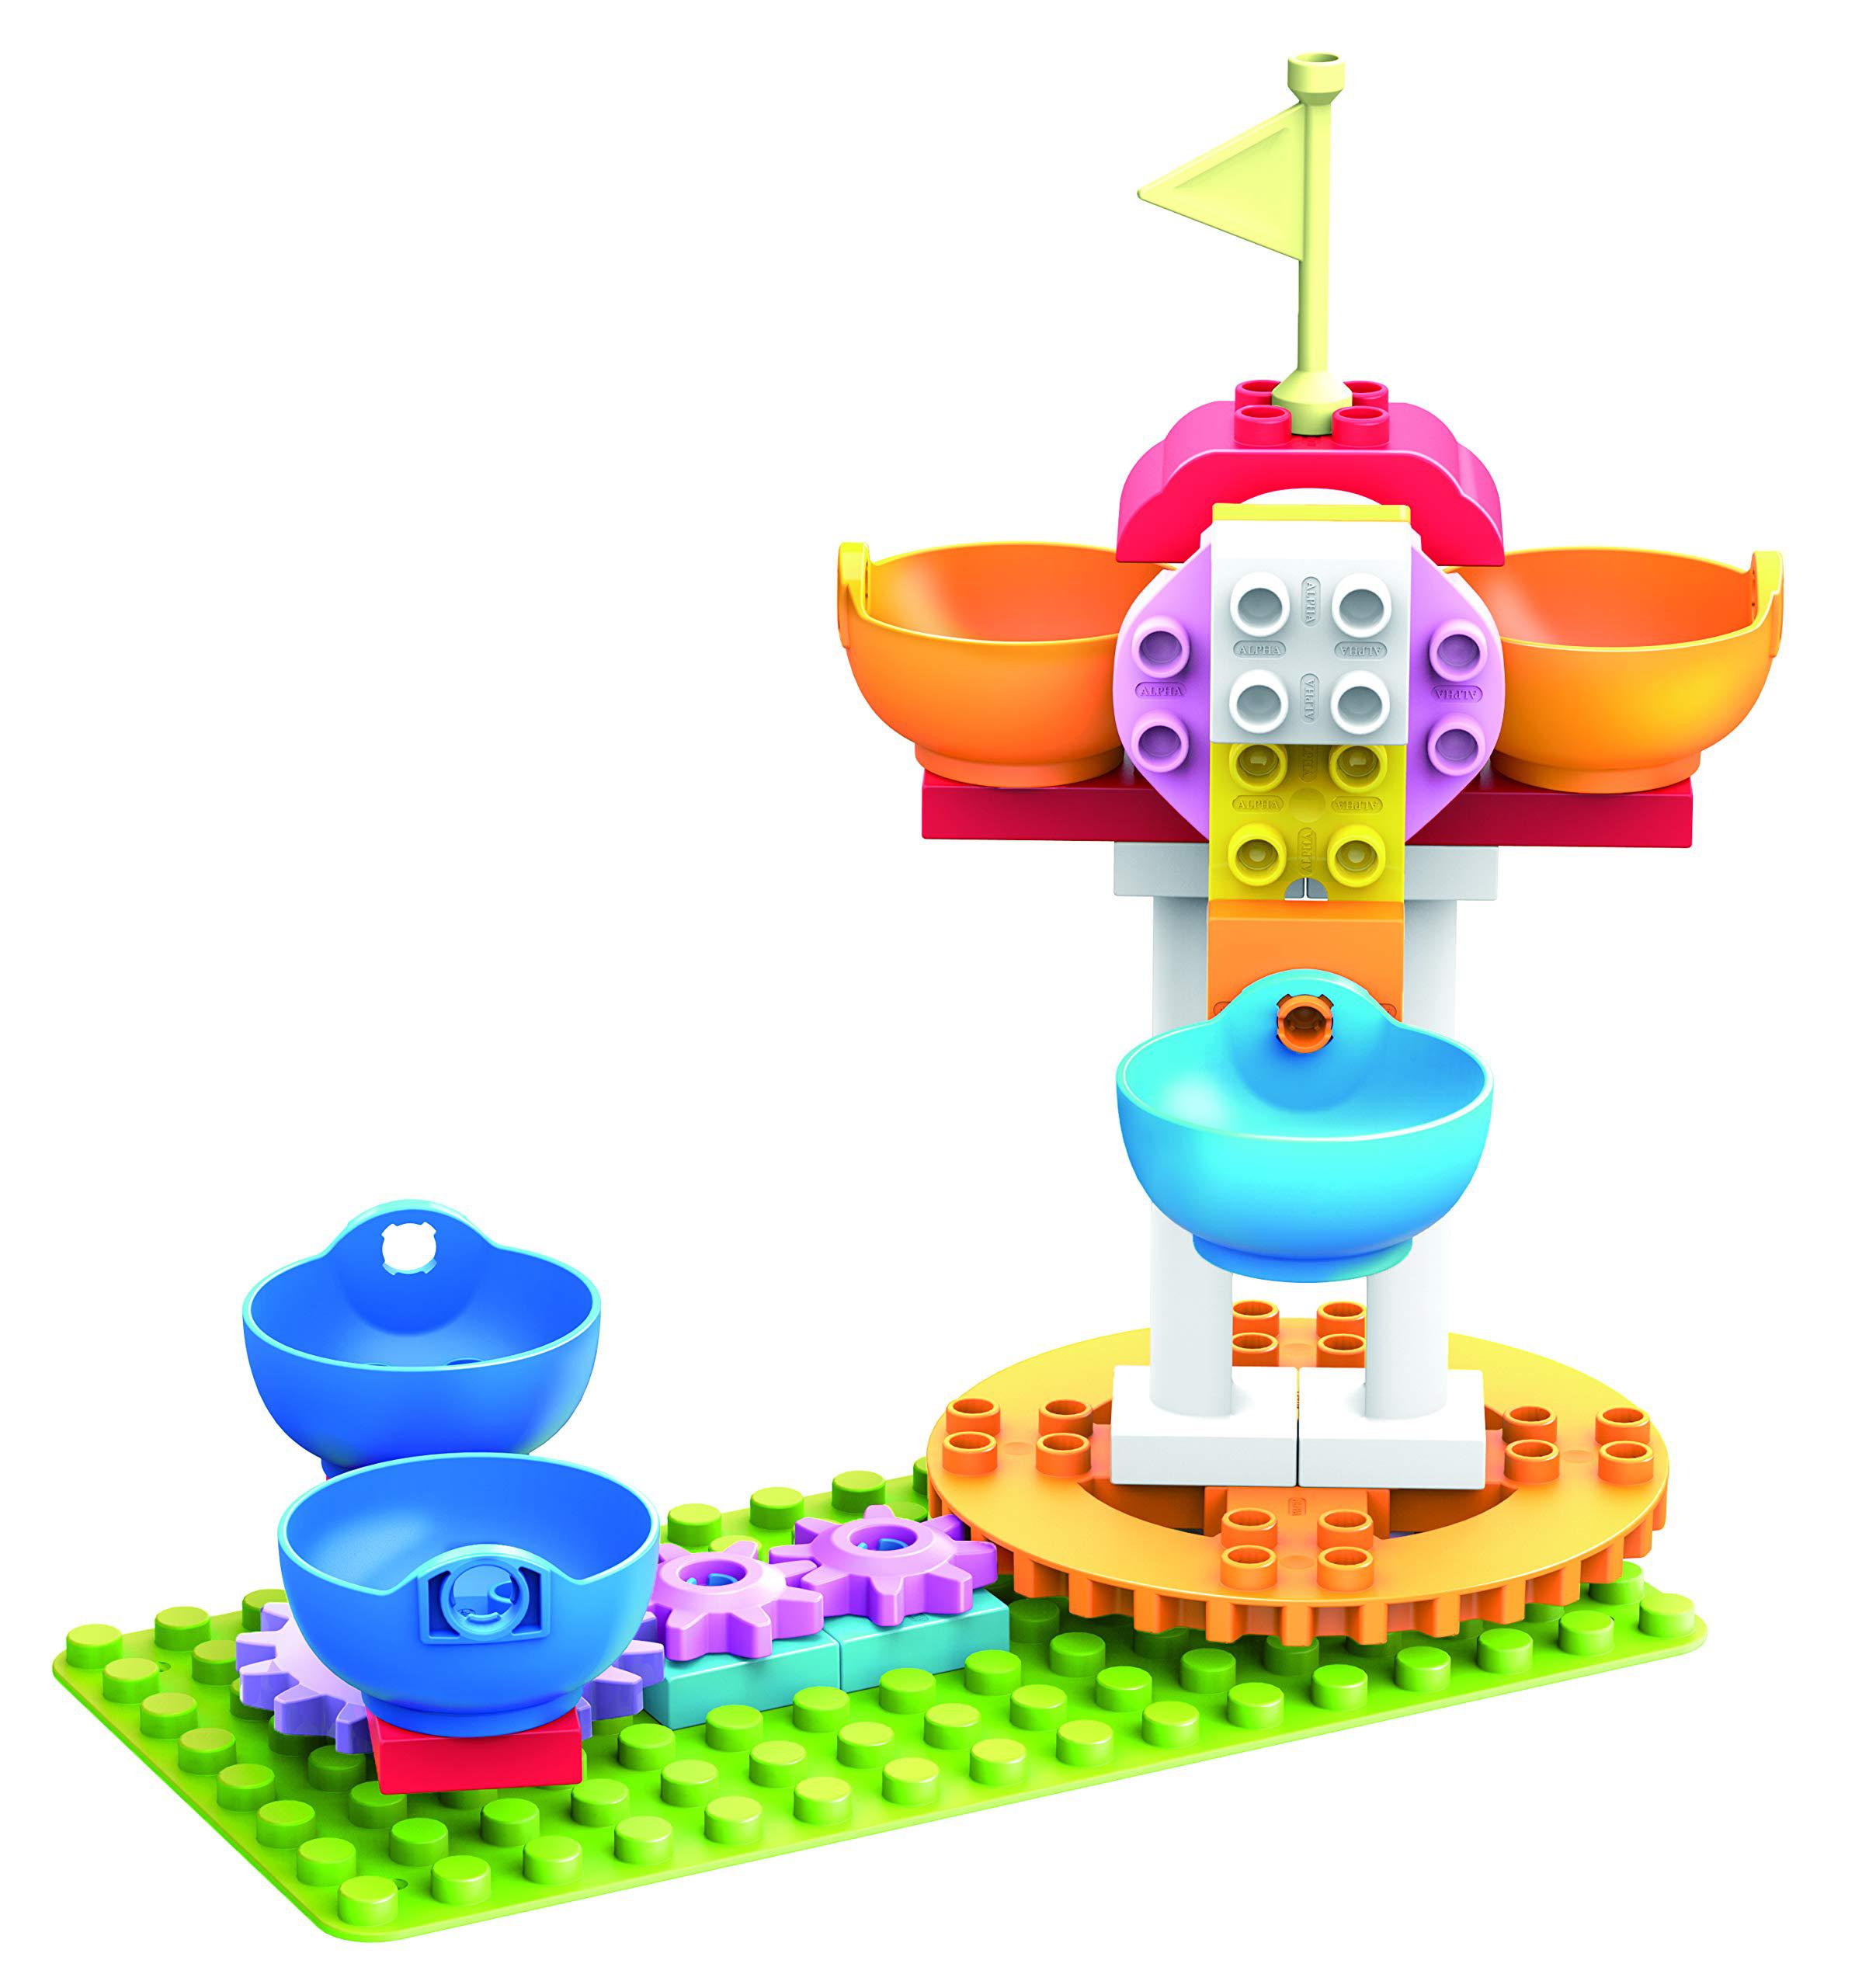 super wings - medium blocks play set - gear building bucket - building blocks for 3 4 5 year old boys and girls - birthday gi